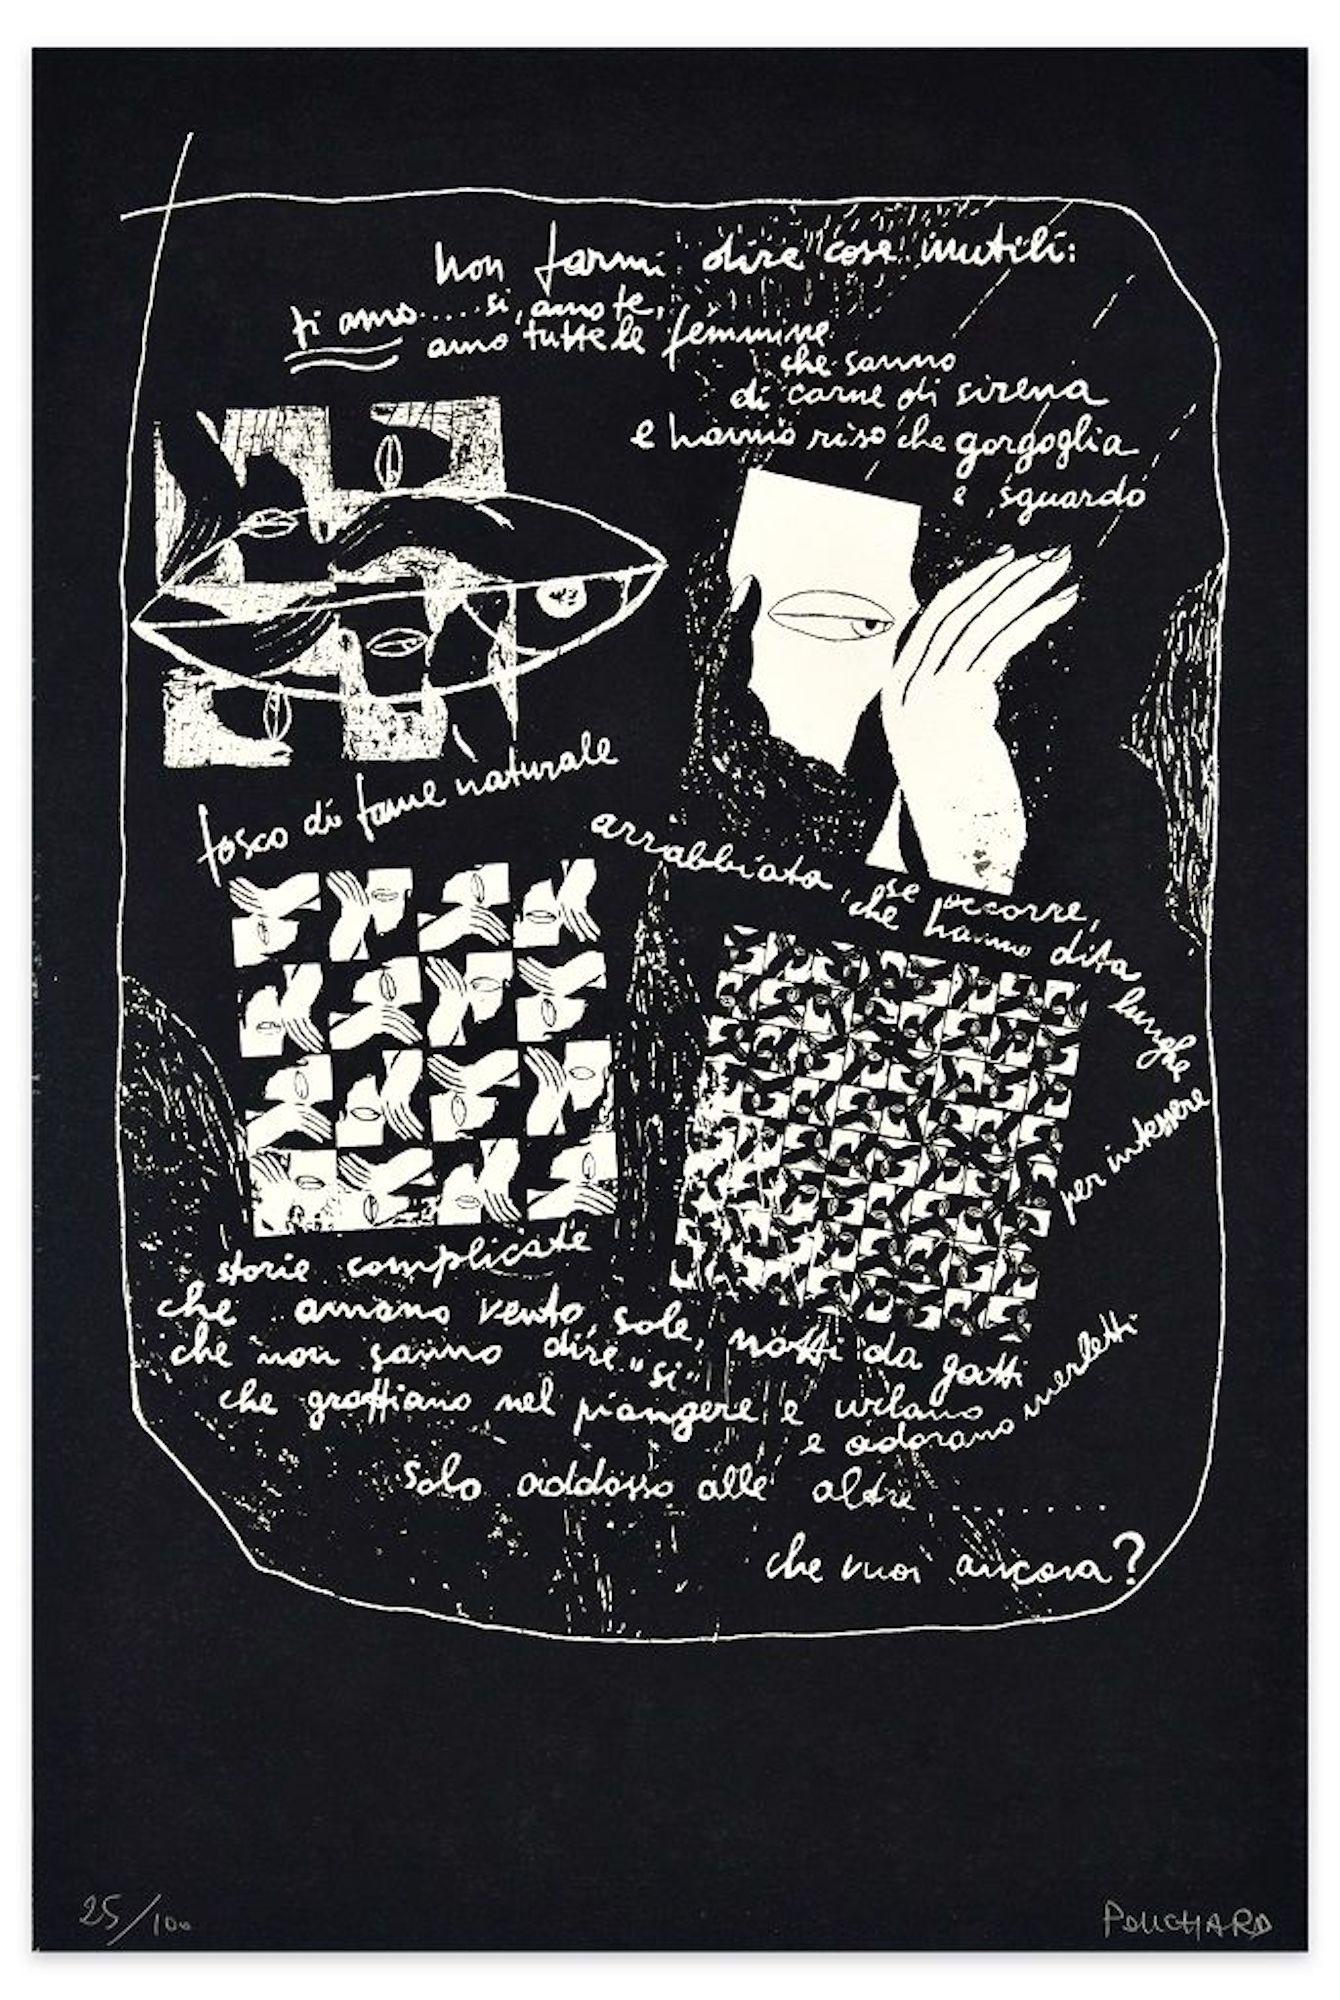 Ennio Pouchard Abstract Print - I Love You (Ti Amo) - Original Screen Print by E. Pouchard - 1975